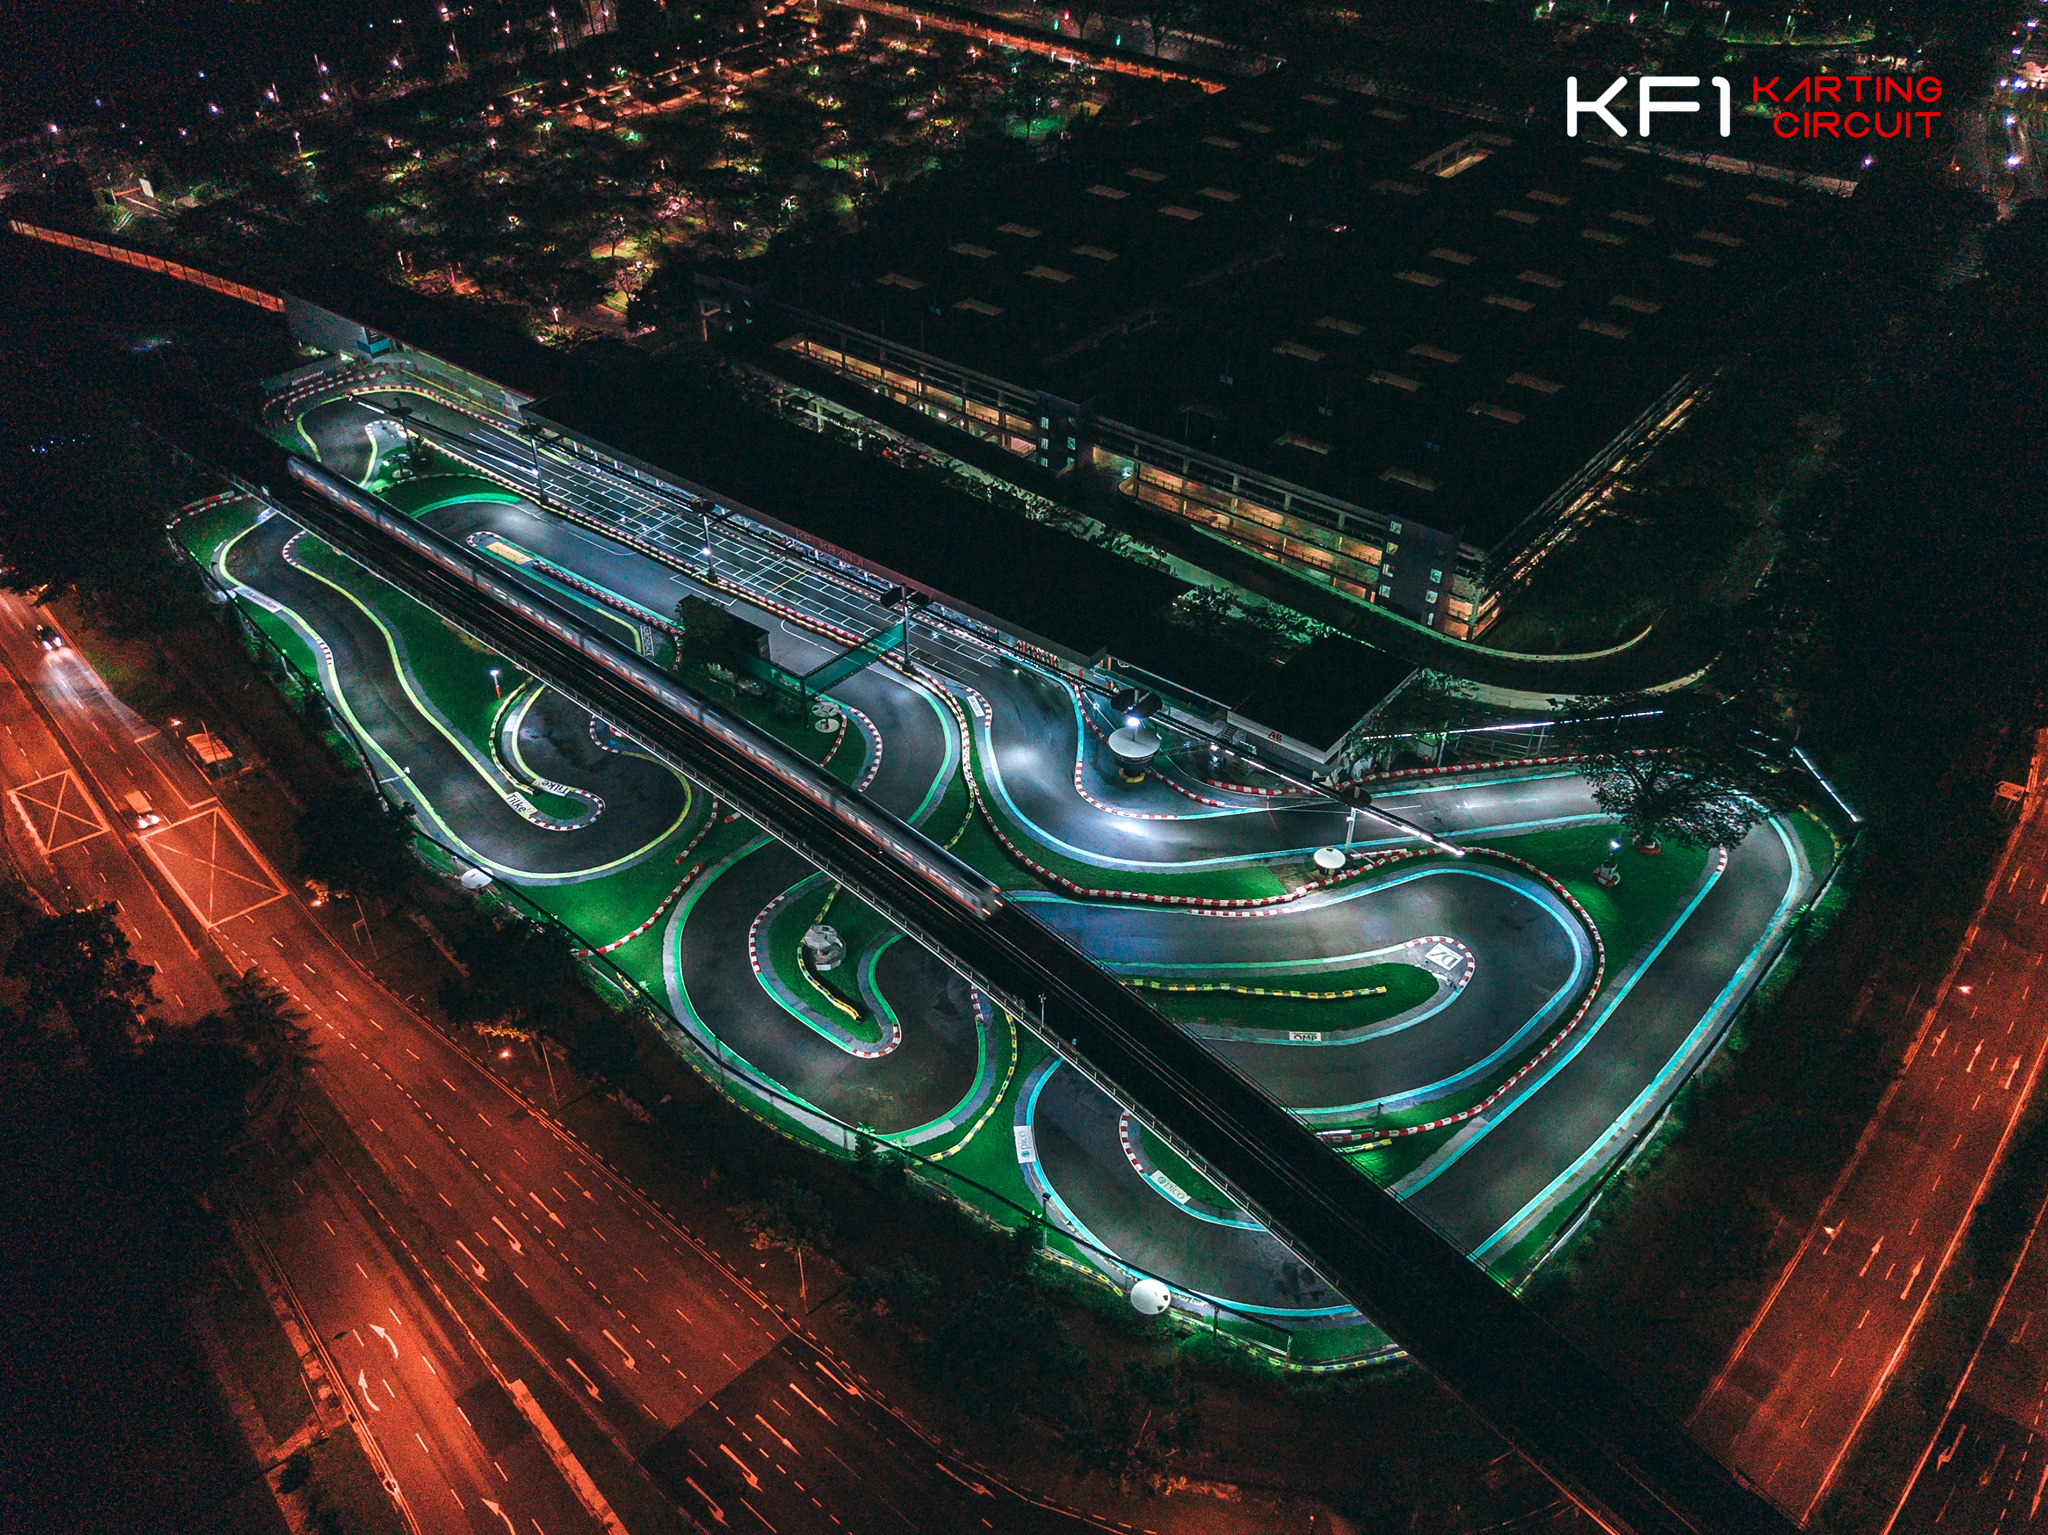 KF1 Karting Deal